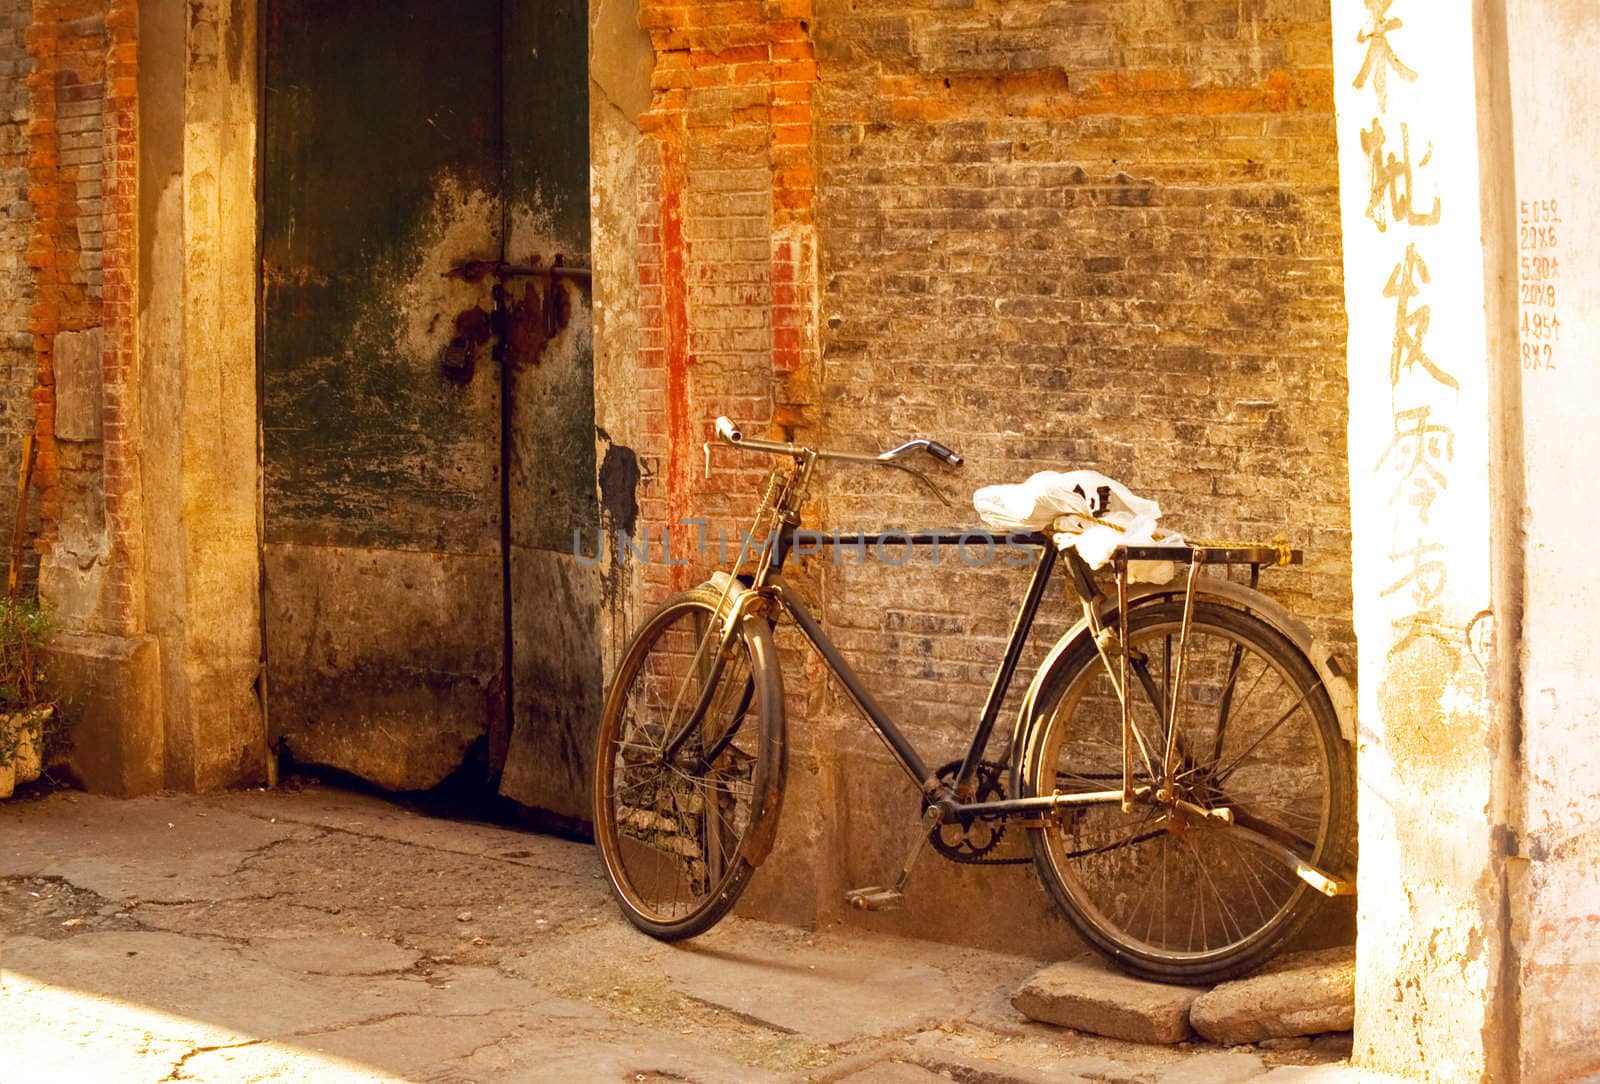 shanghai old bicycle over a brick walland old door